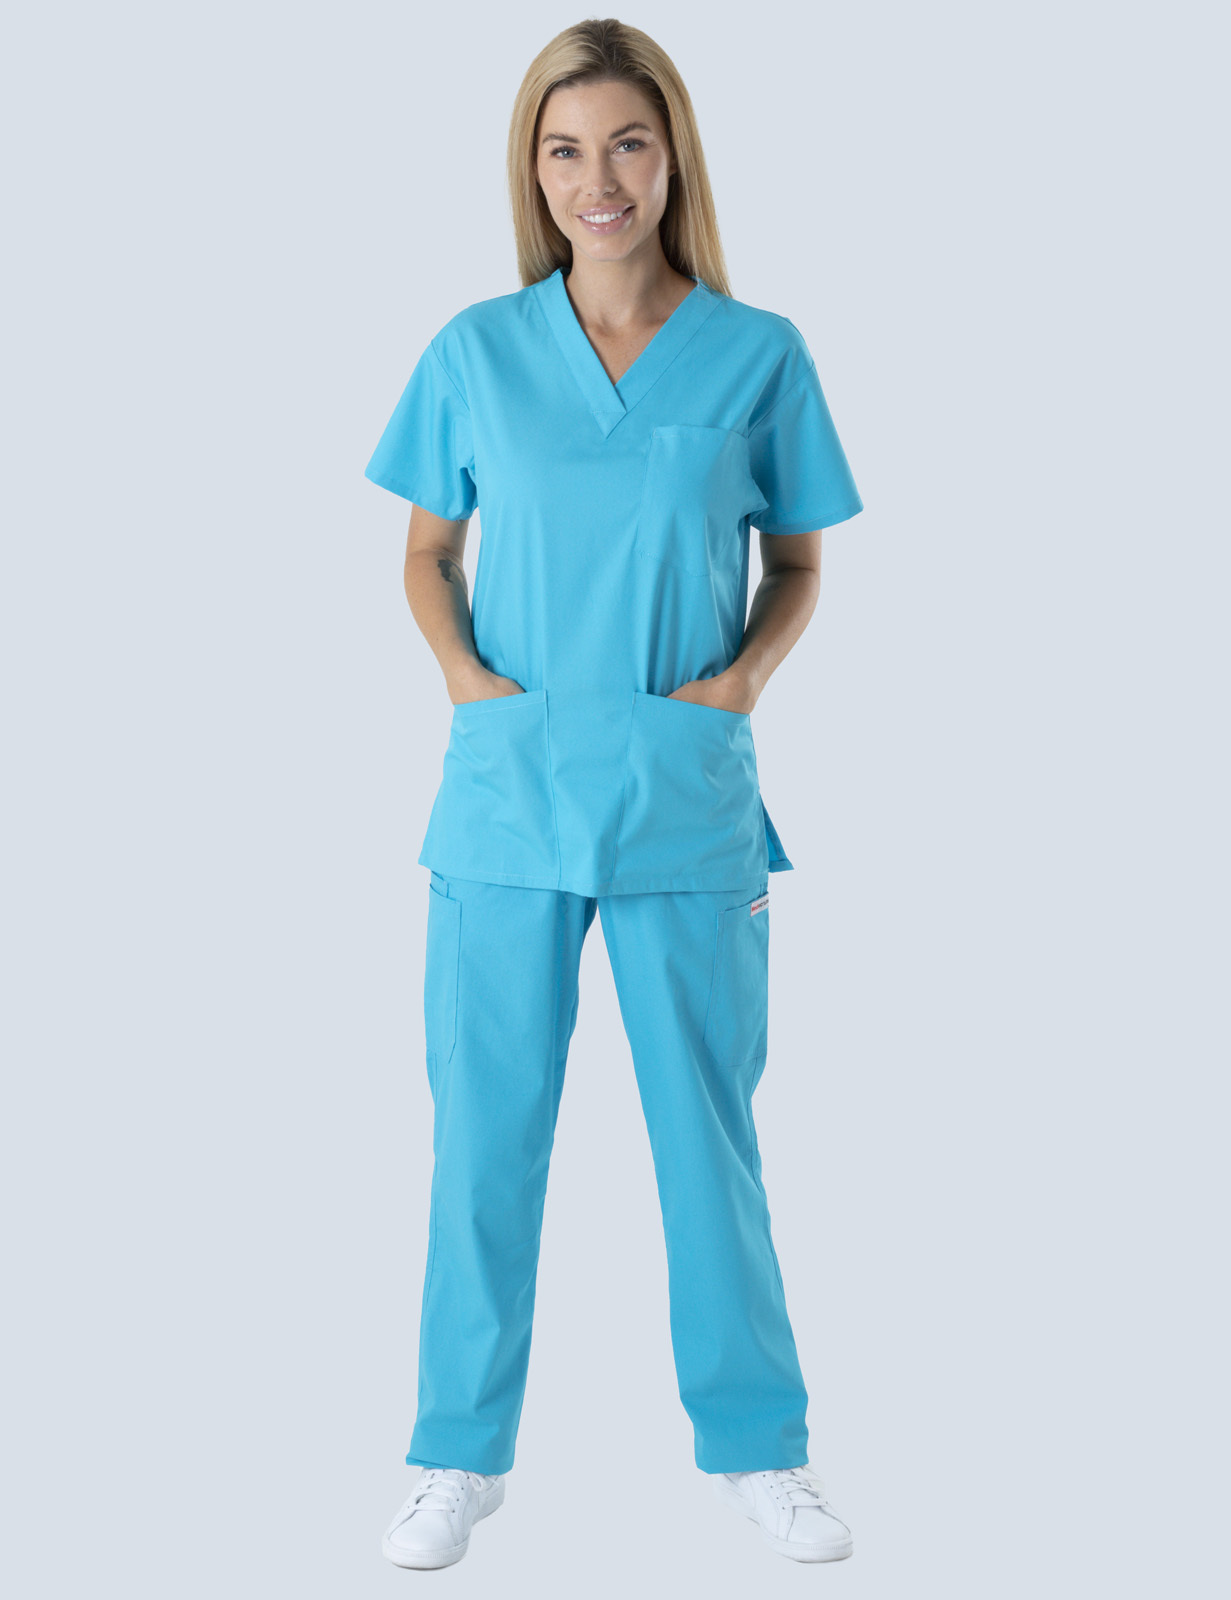 Gympie Hospital - Enrolled Nurse (4 Pocket Scrub Top and Cargo Pants in Aqua incl Logos)